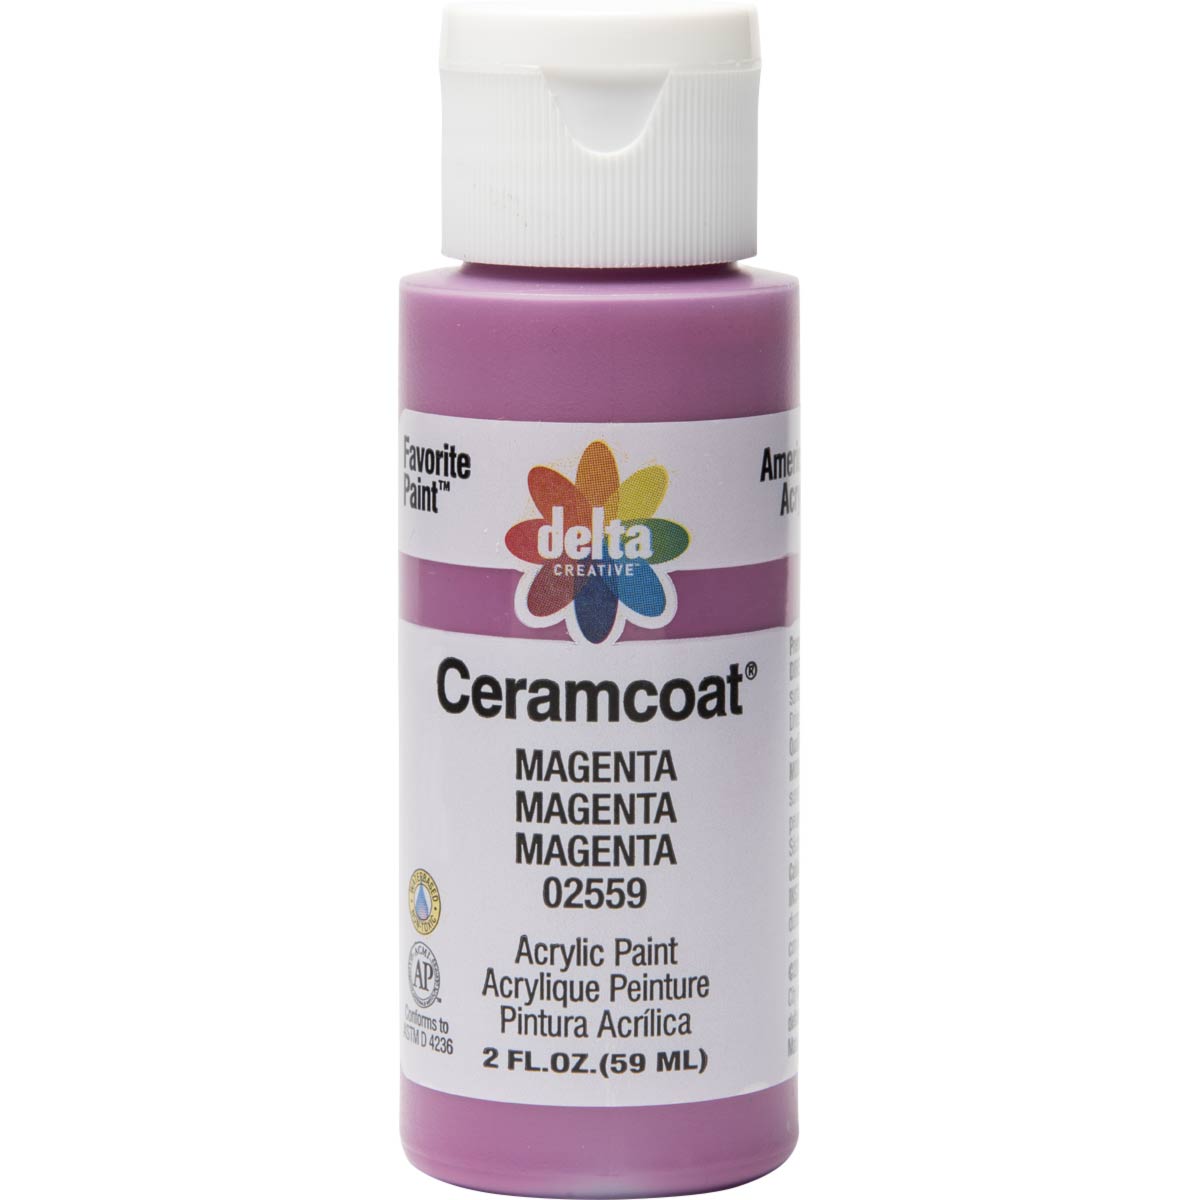 Delta Ceramcoat Acrylic Paint - Magenta, 2 oz. - 025590202W